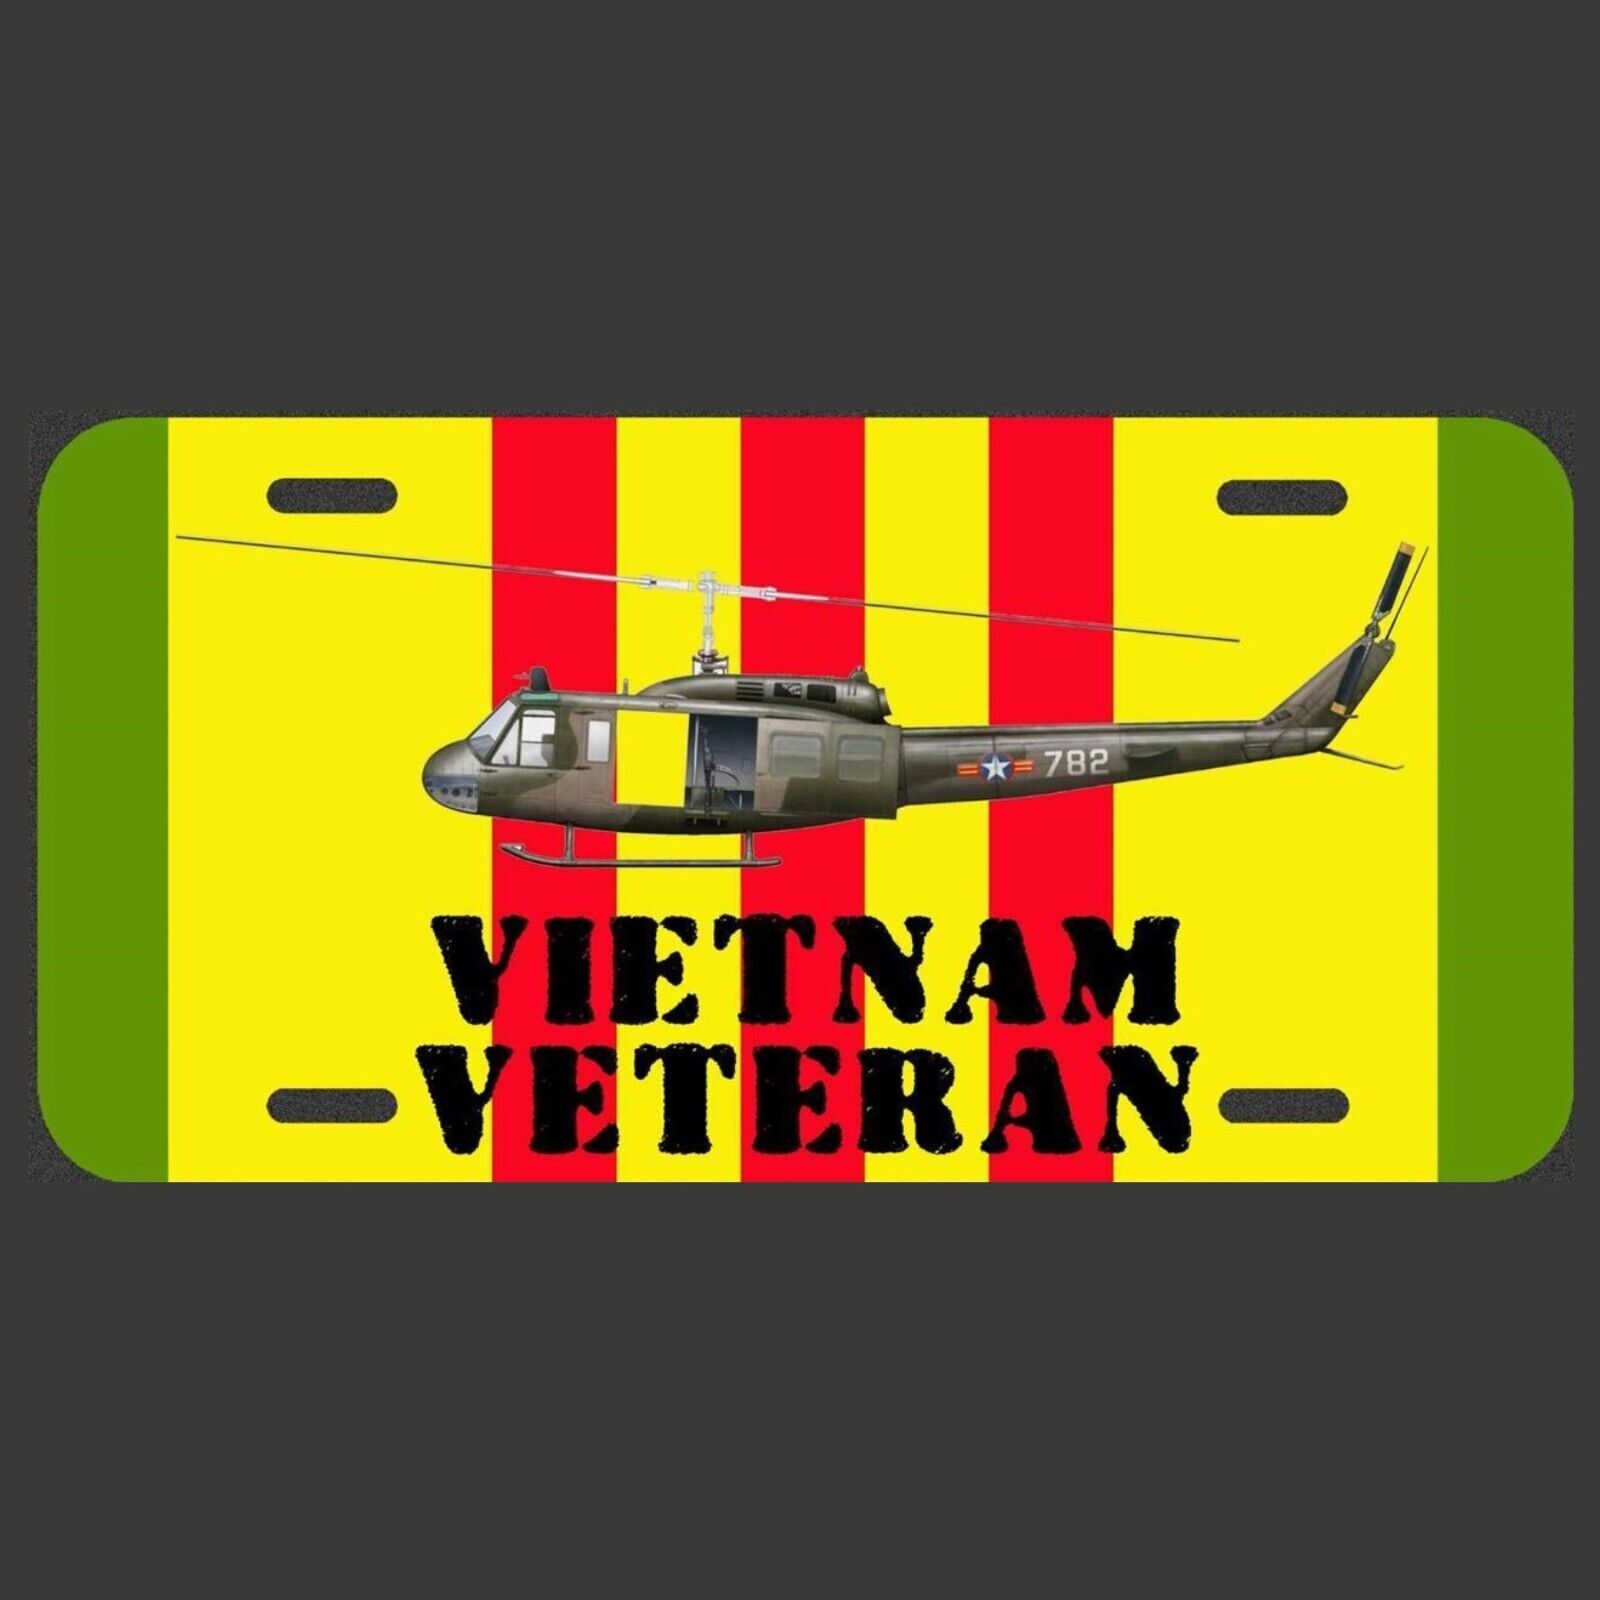 License Plate Vietnam Veteran Helicopter Standard Automobile Size